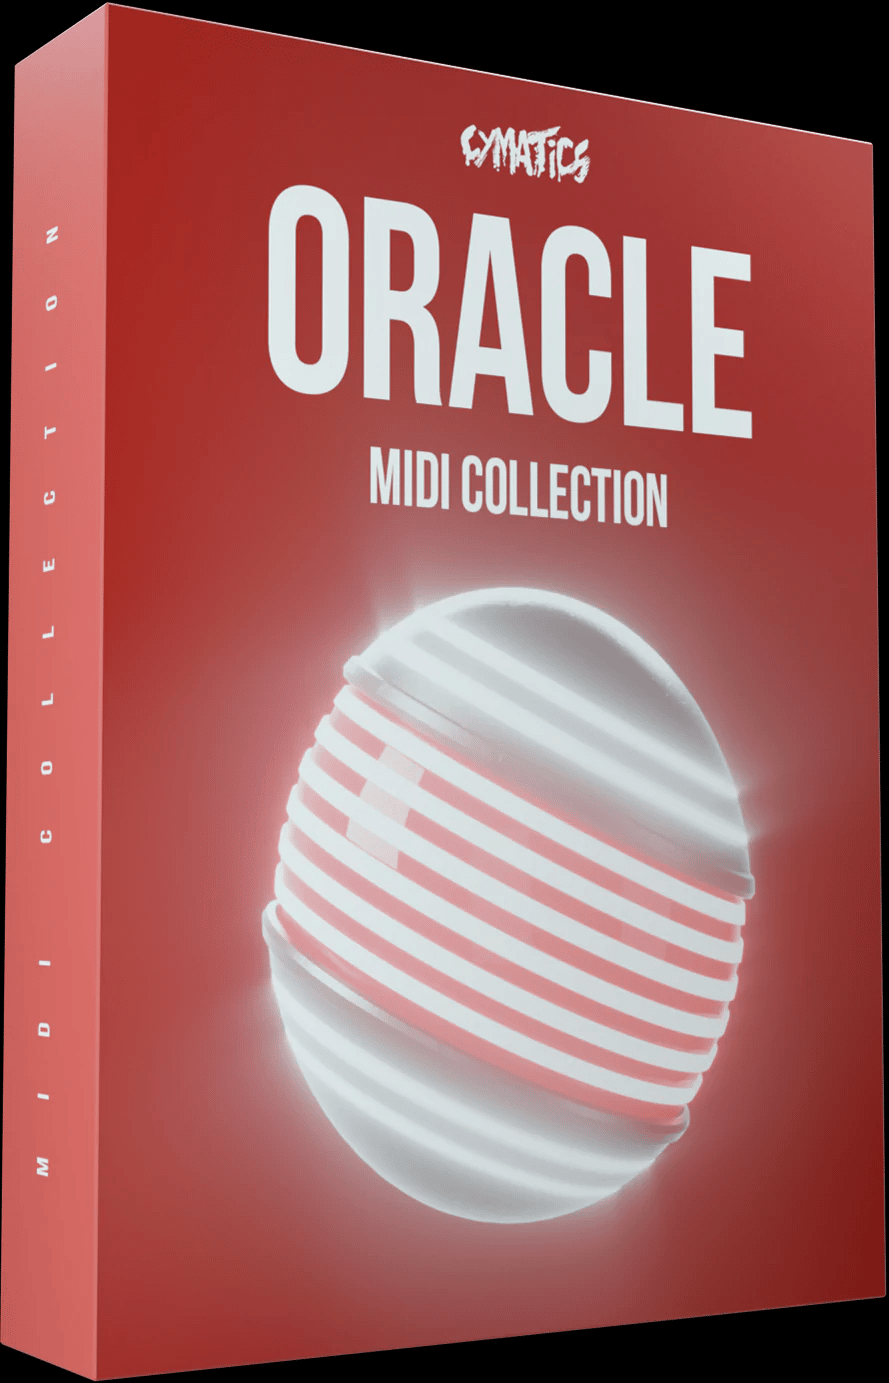 Oracle MIDI and sample pack - Cymatics